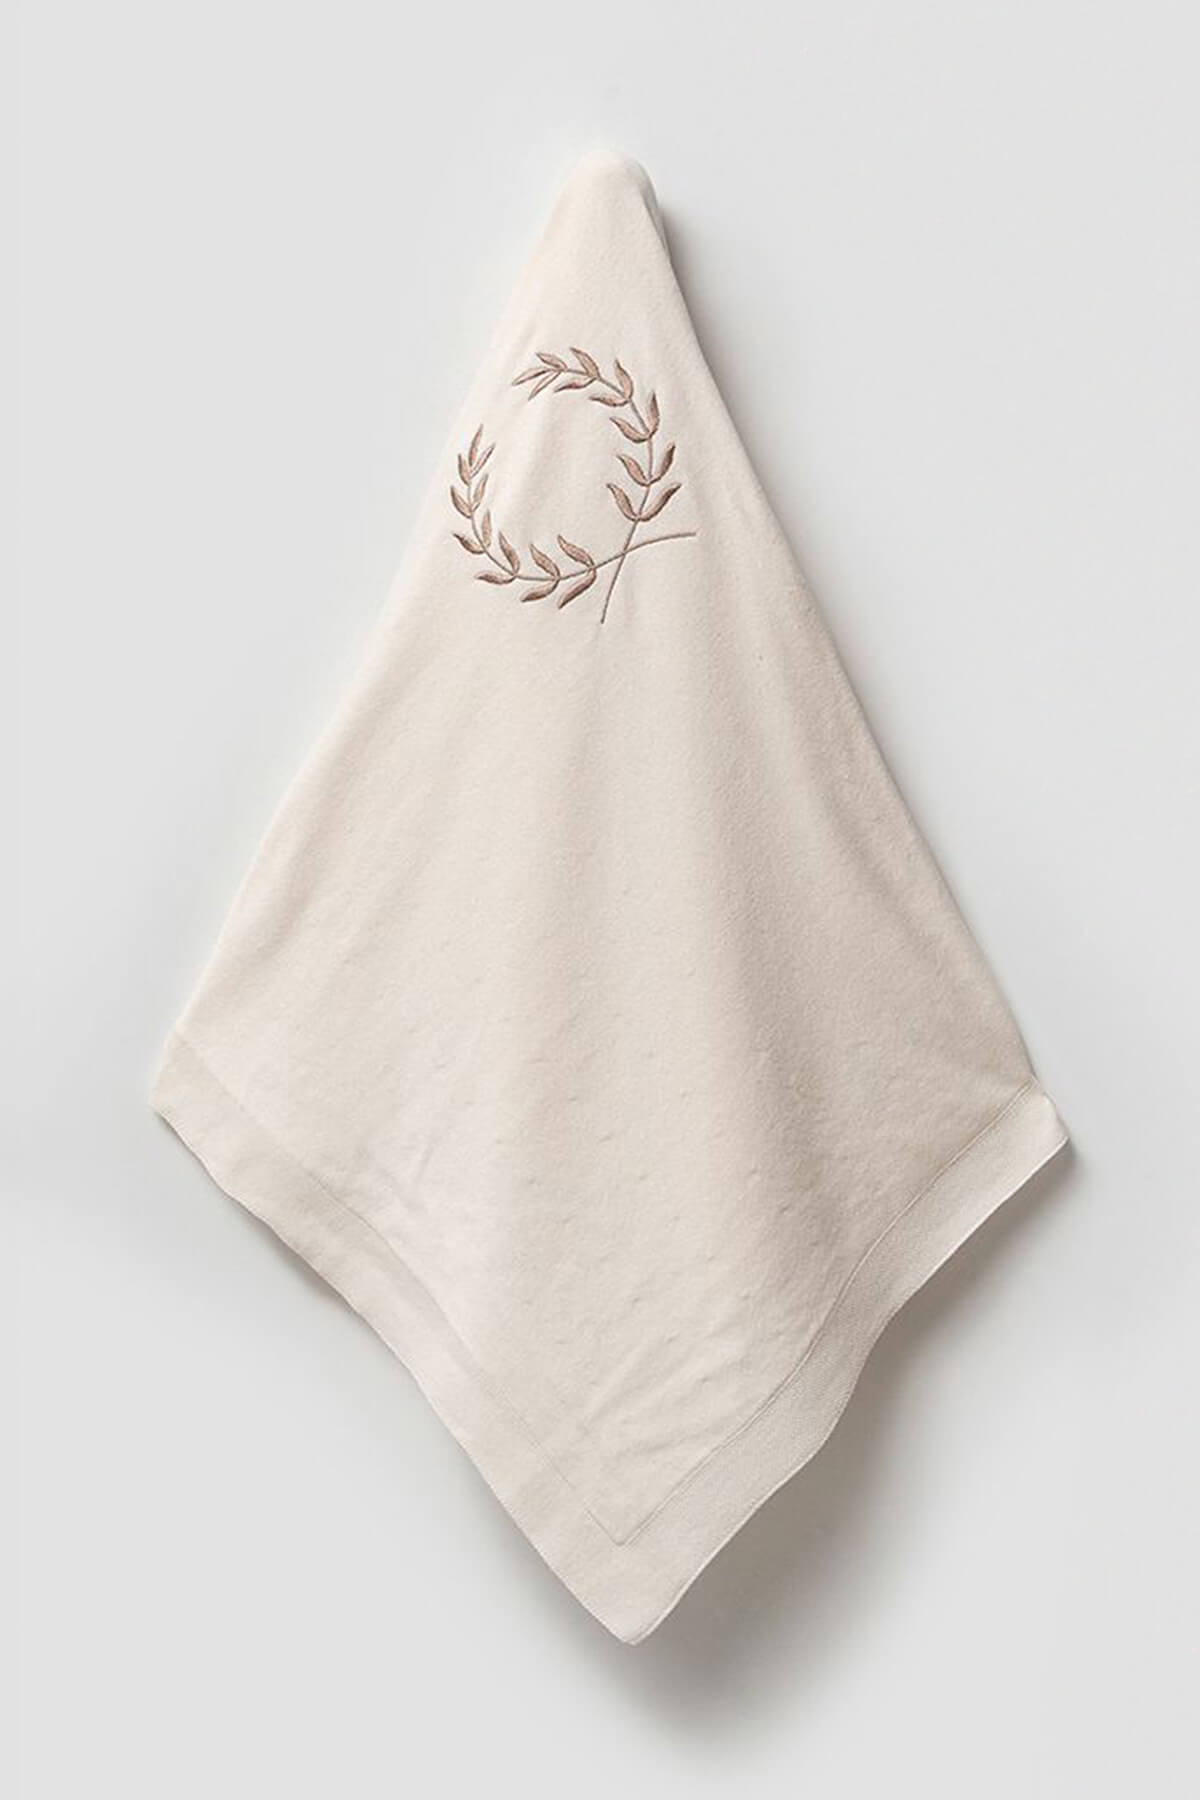 Kevin Cream Knit Newborn Coming Home Set (5 Pcs)